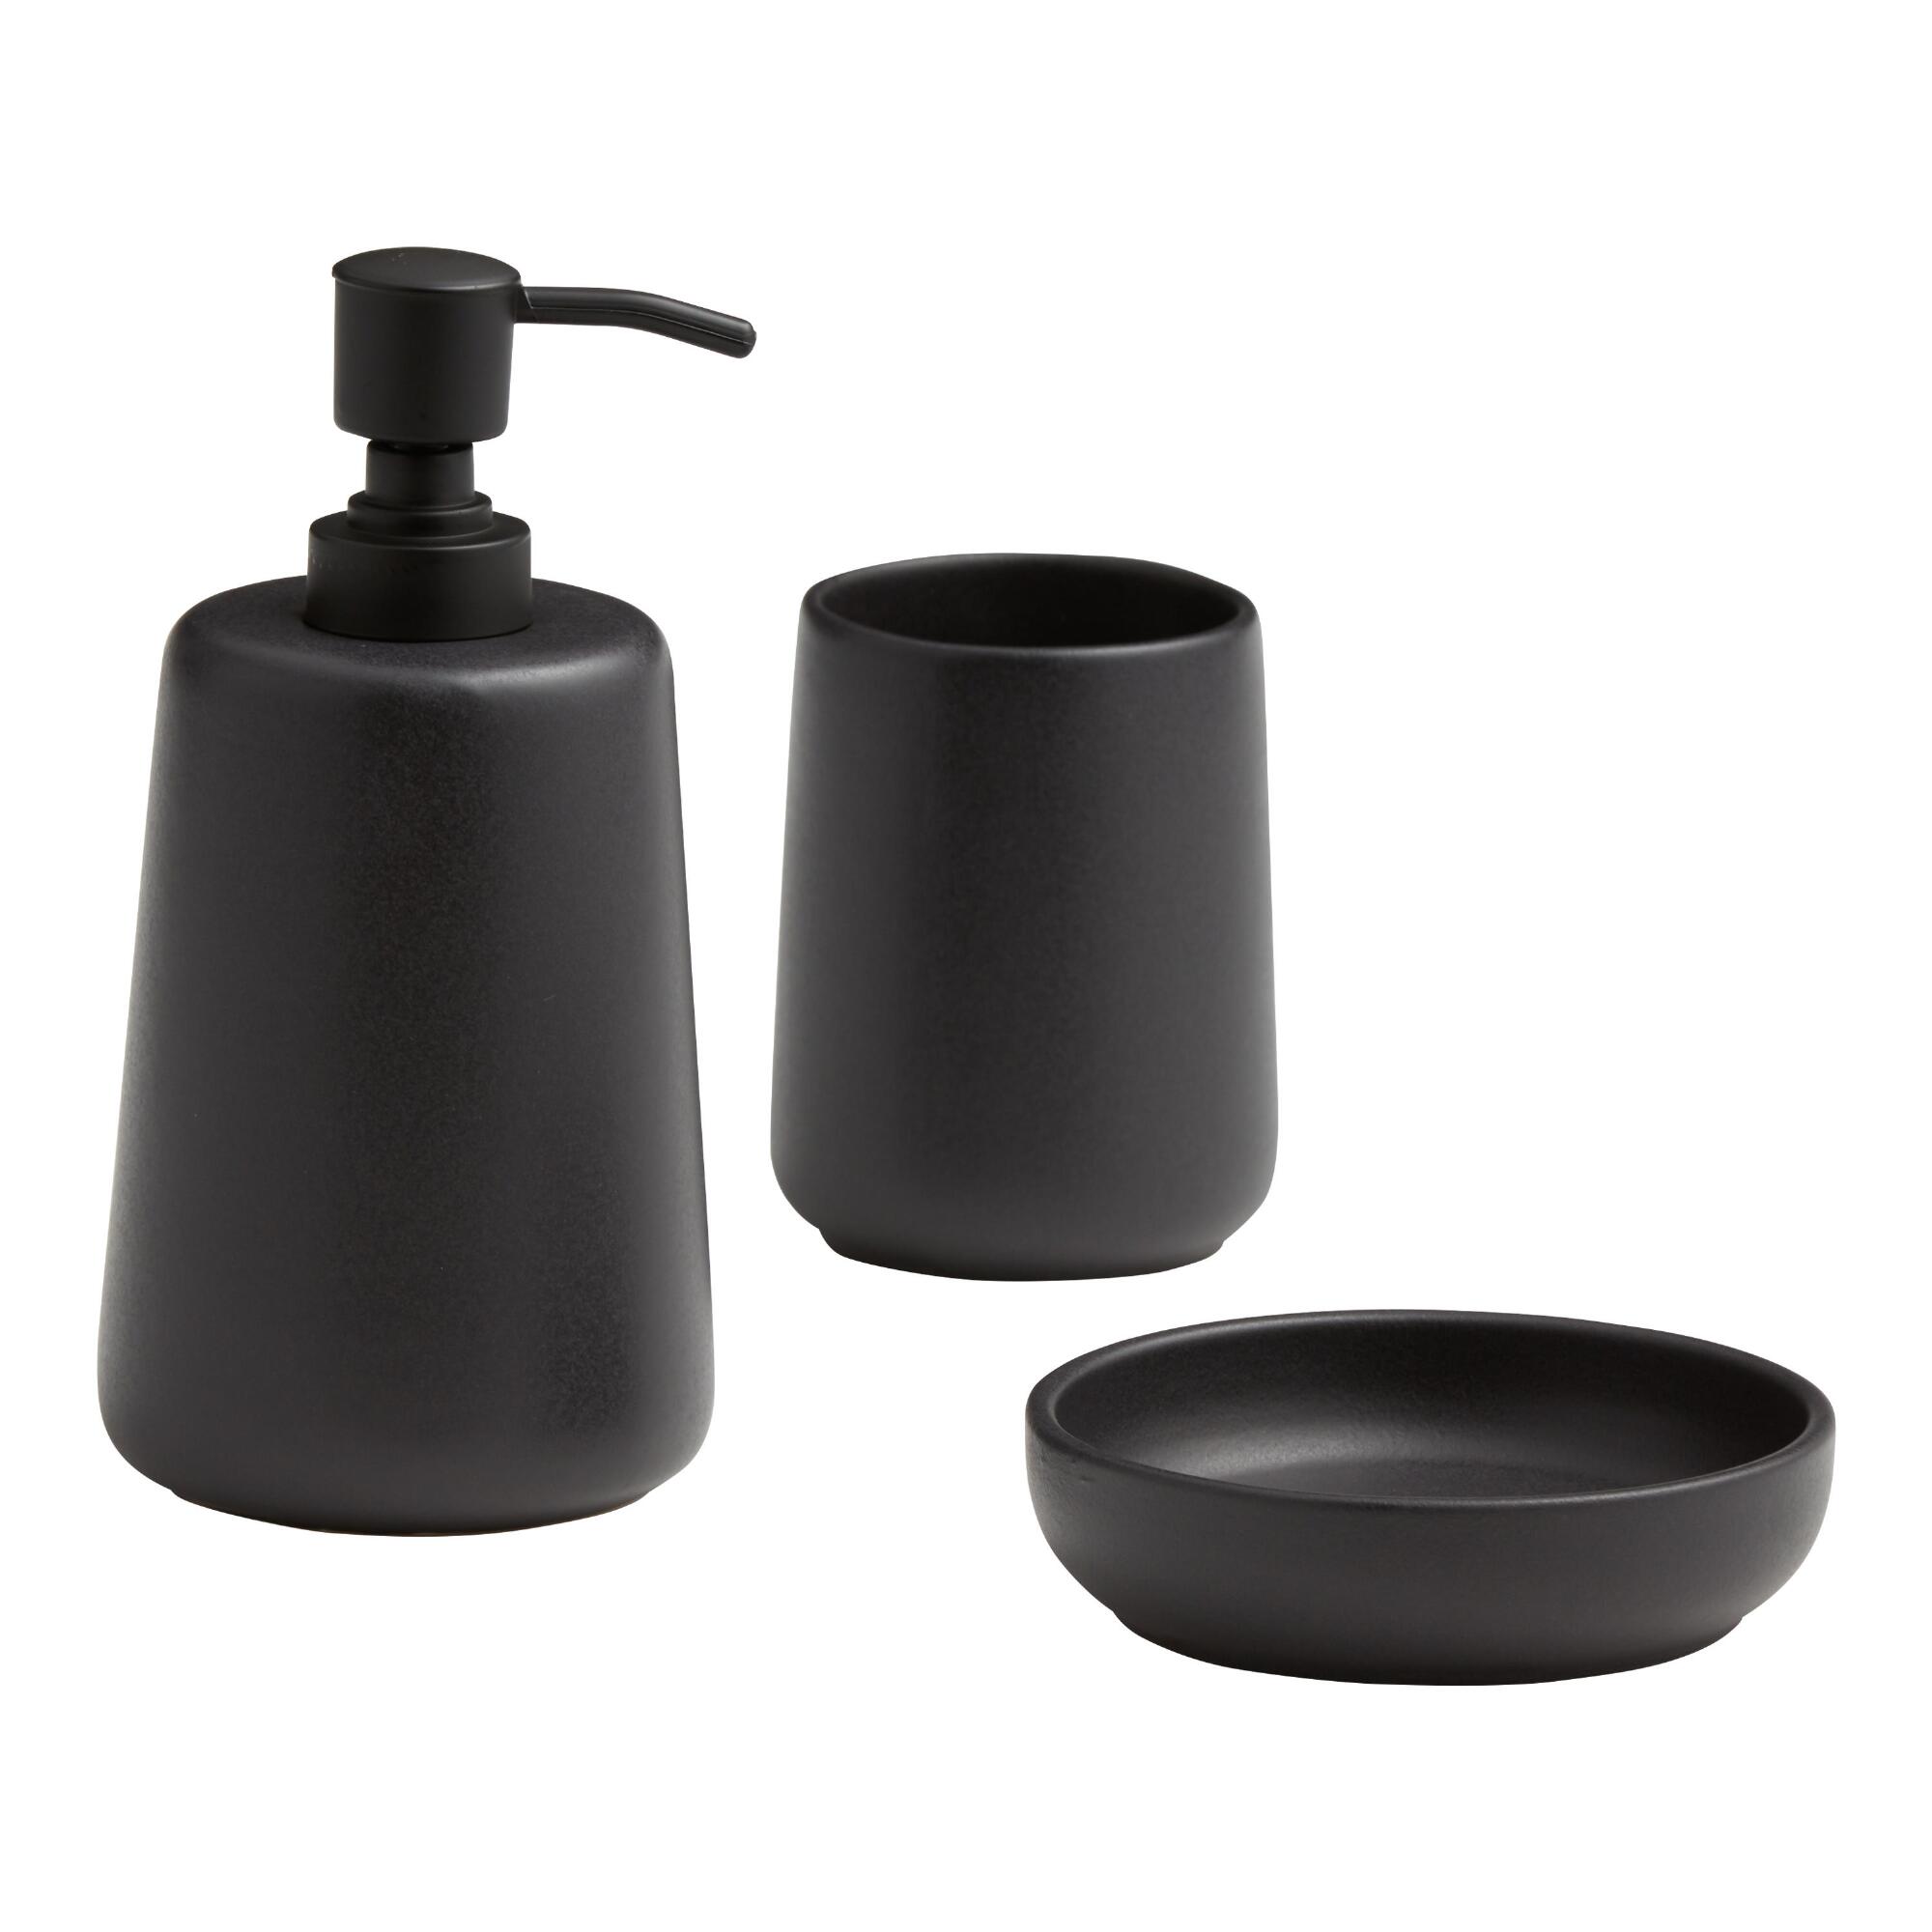 Matte Black Ceramic Bathroom Accessories Collection by World Market